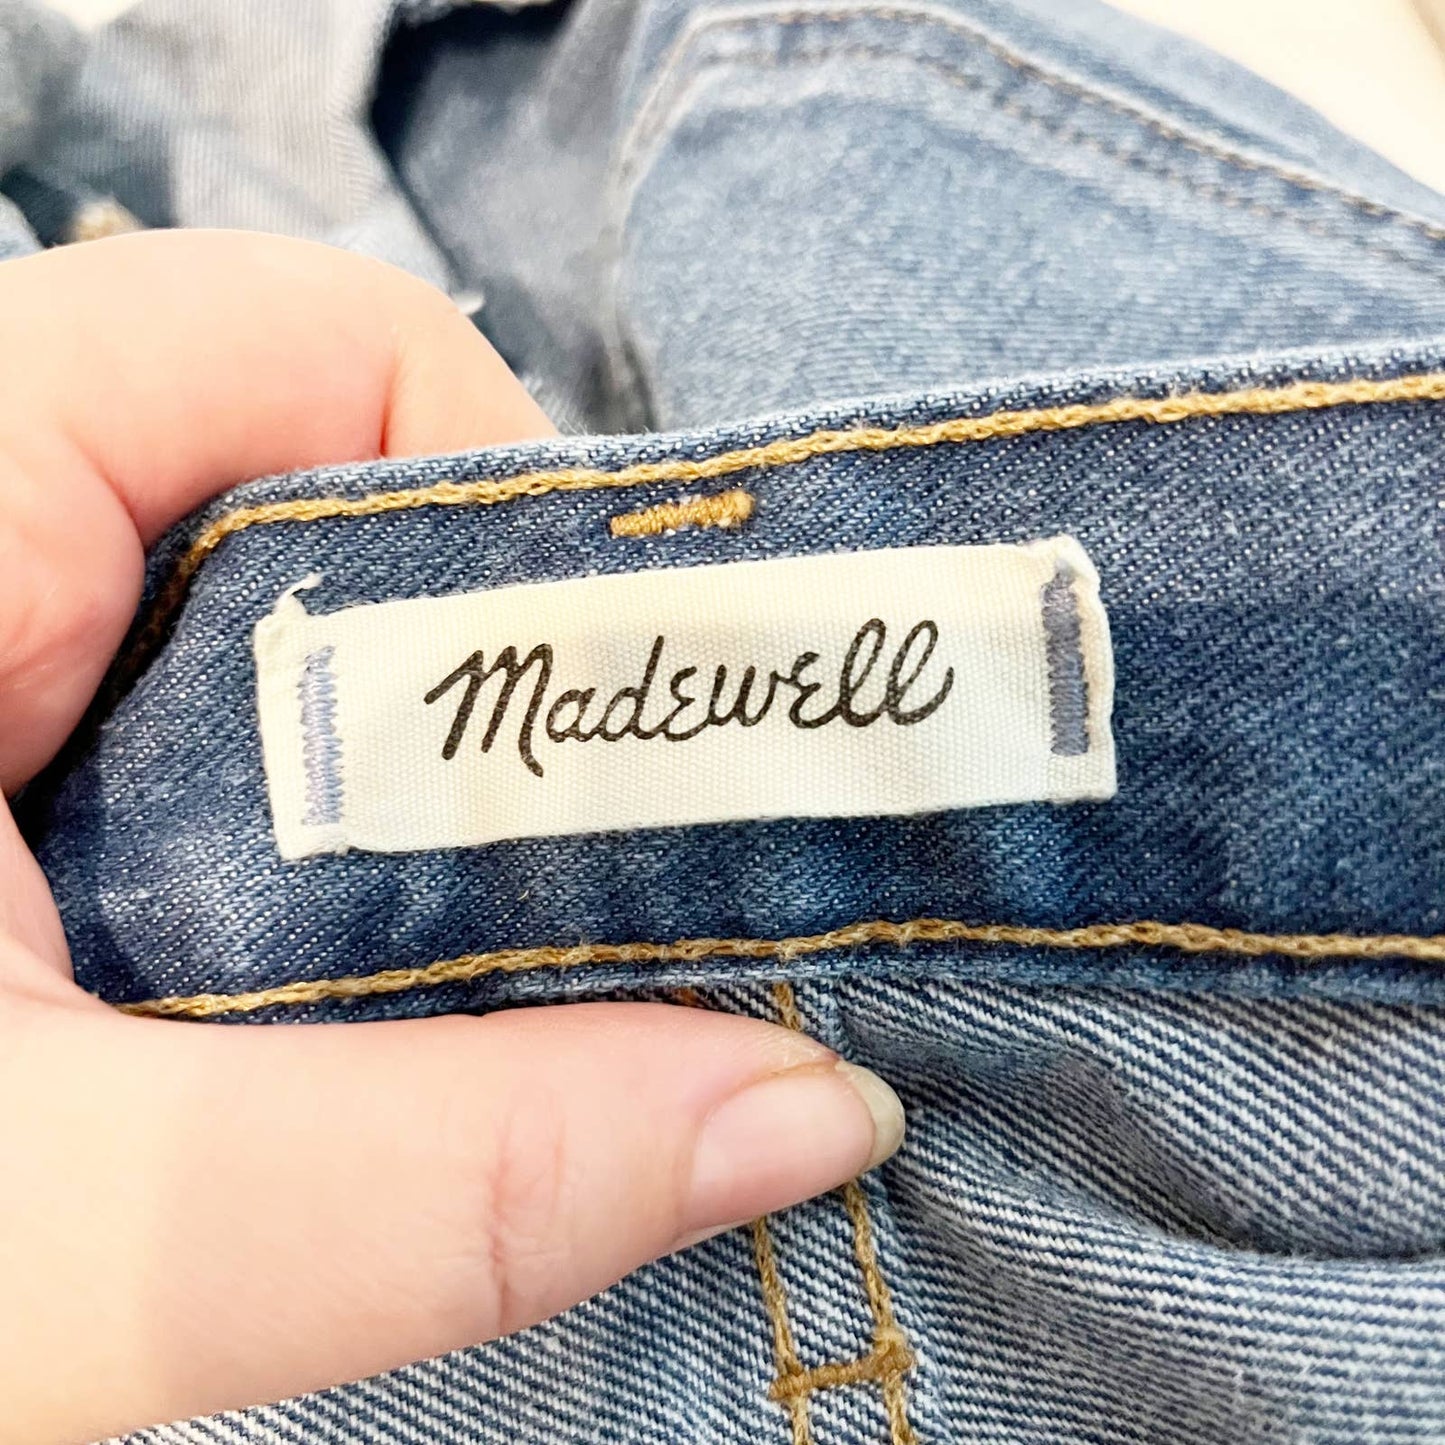 Madewell The Perfect Jean High Rise Cutoff Denim Shorts Ullman Wash Blue 25